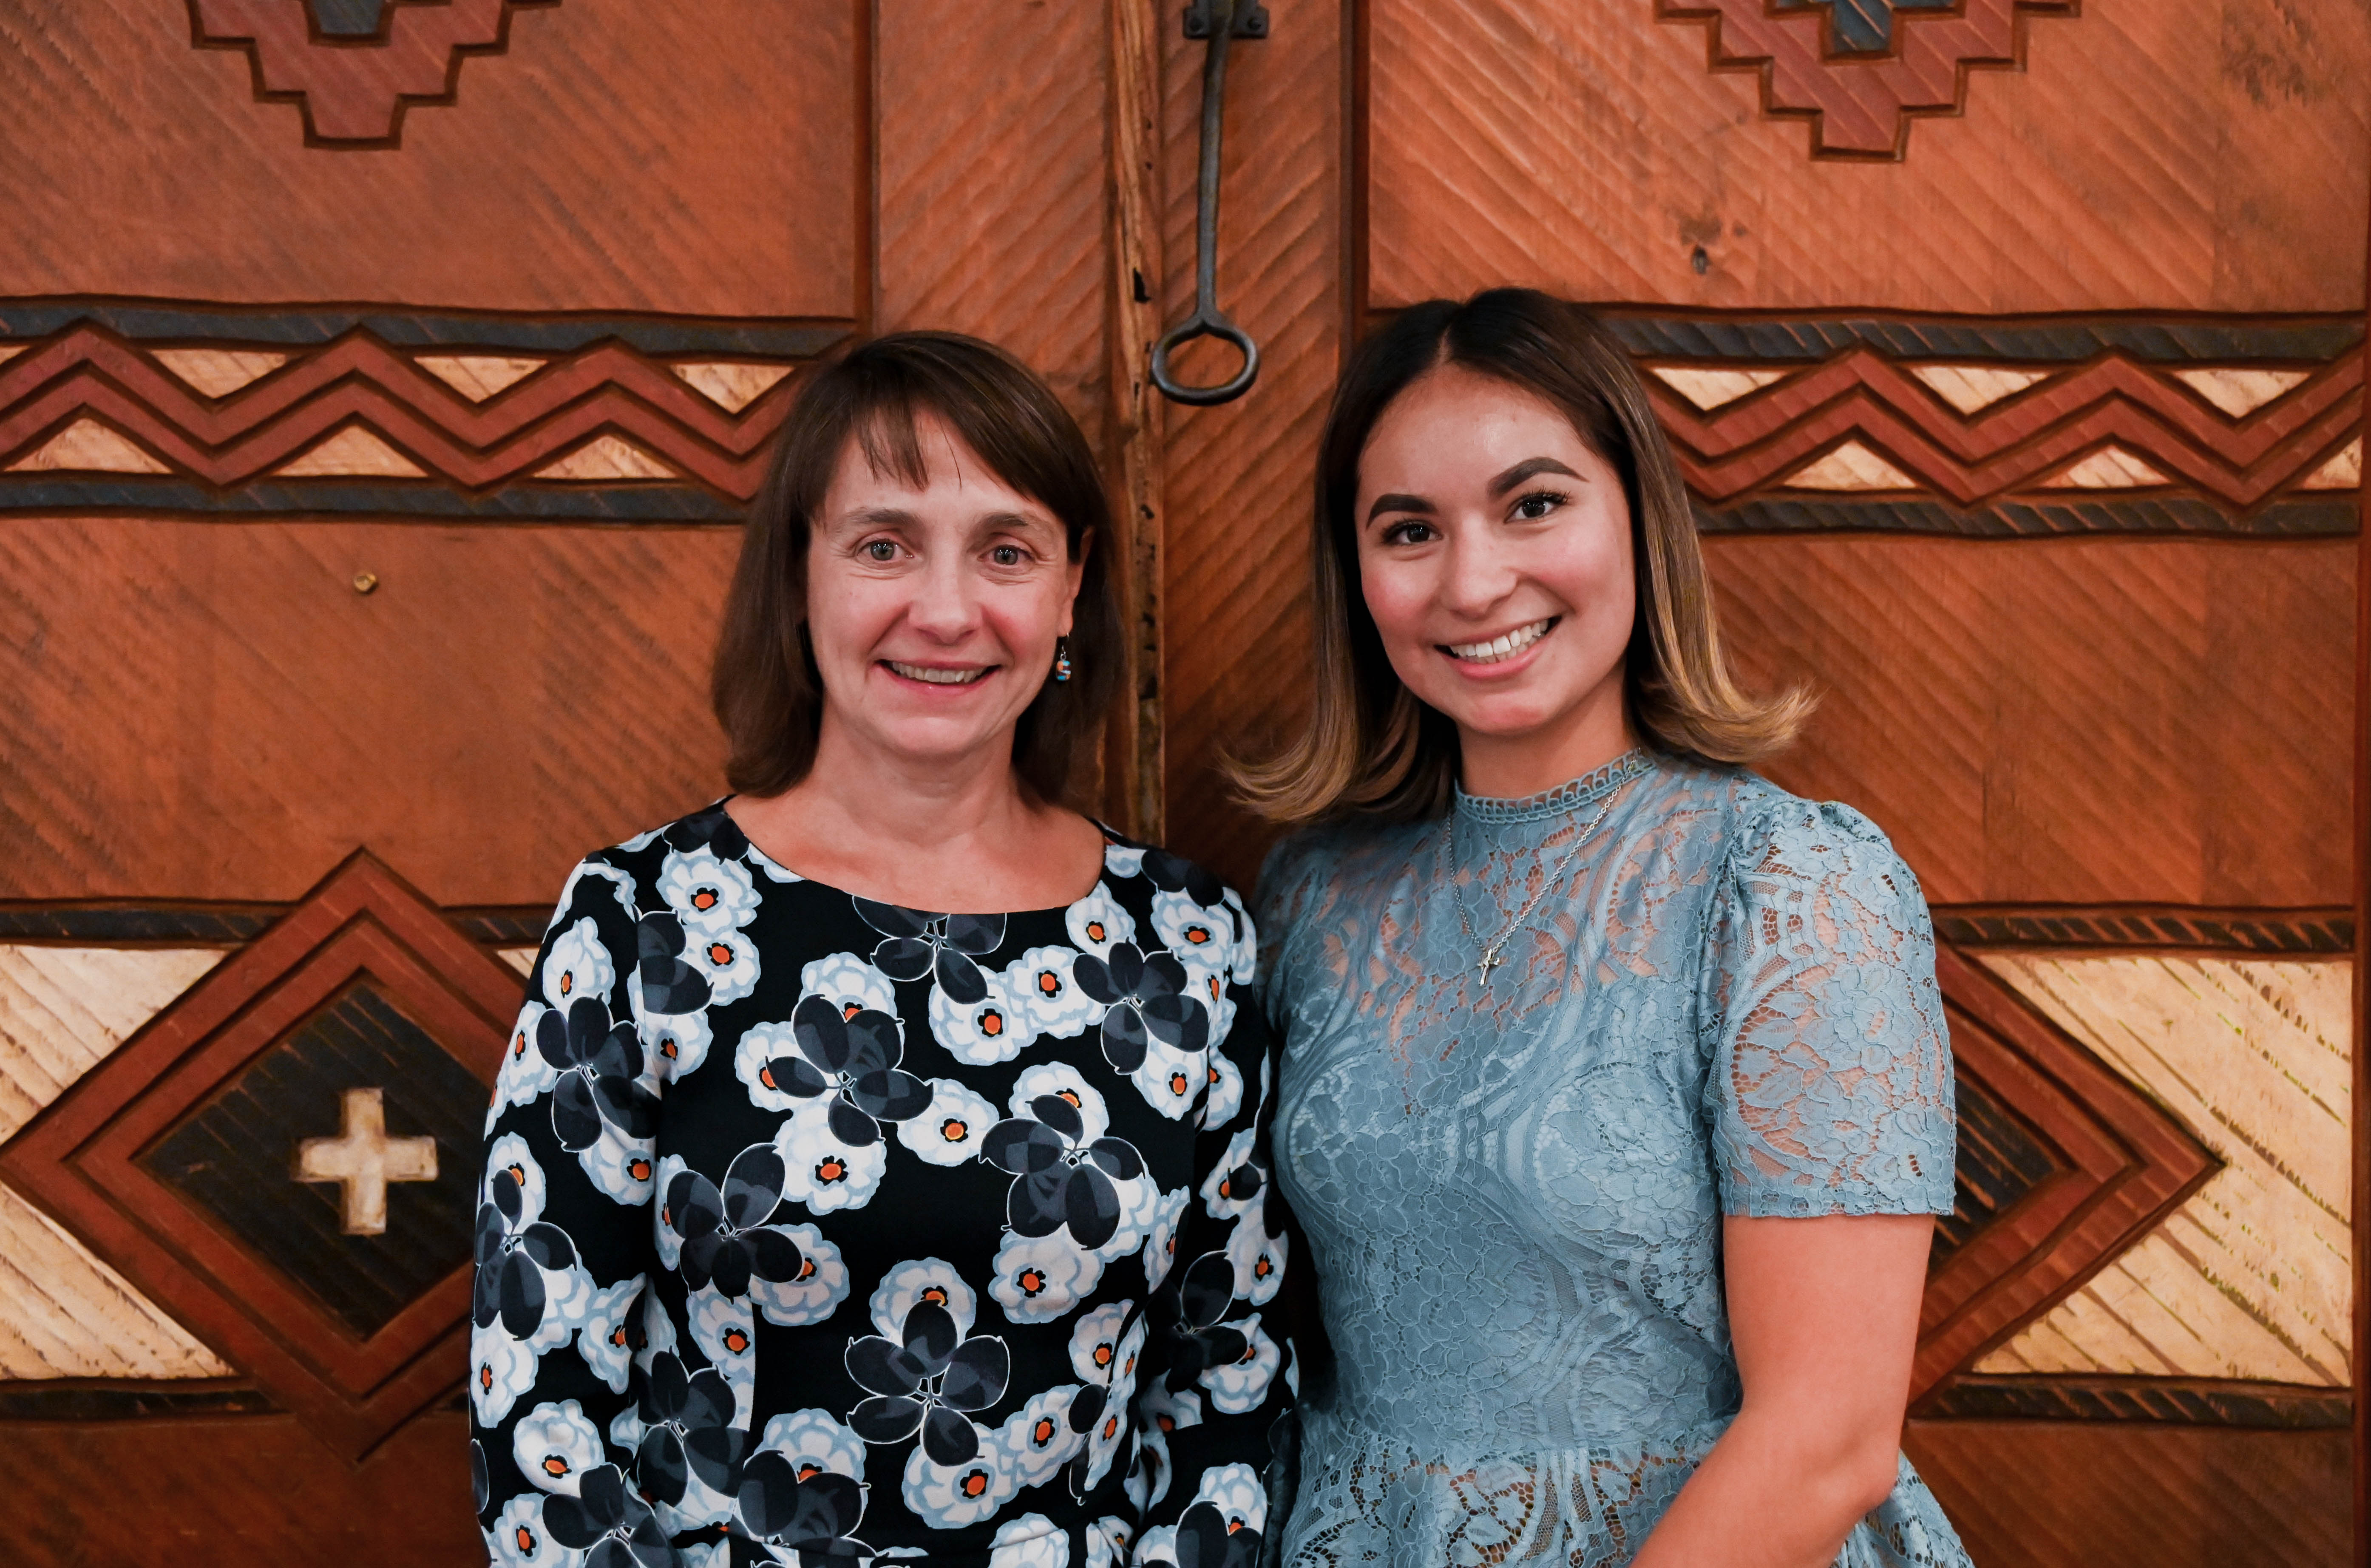 Vianey Rueda (left) with Tanya Trujillo (right) at the inaugural Coalition of Rio Grande Water Users in Santa Fe, NM.